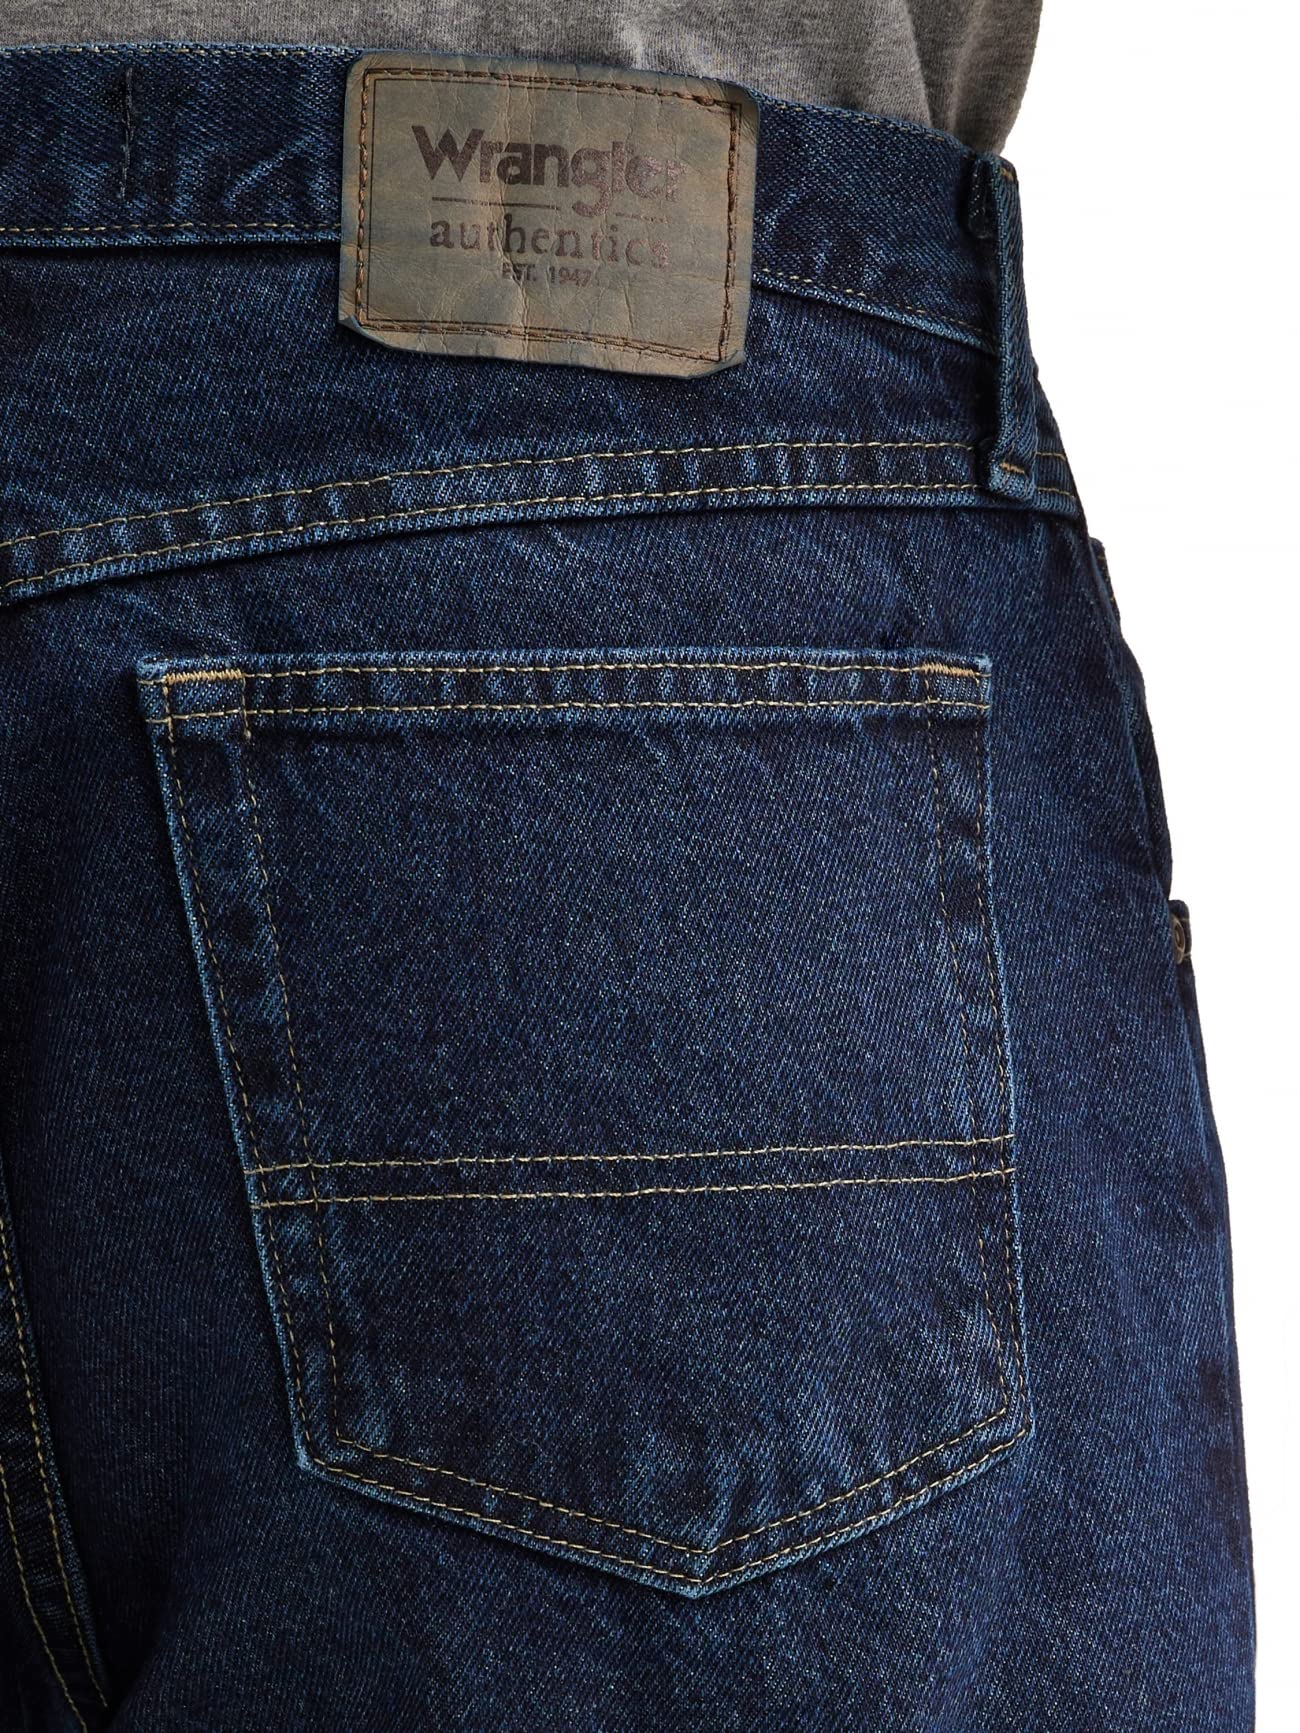 Wrangler Authentics Men's Classic 5-Pocket Relaxed Fit Cotton Jean, Dark Rinse, 40W X 36L